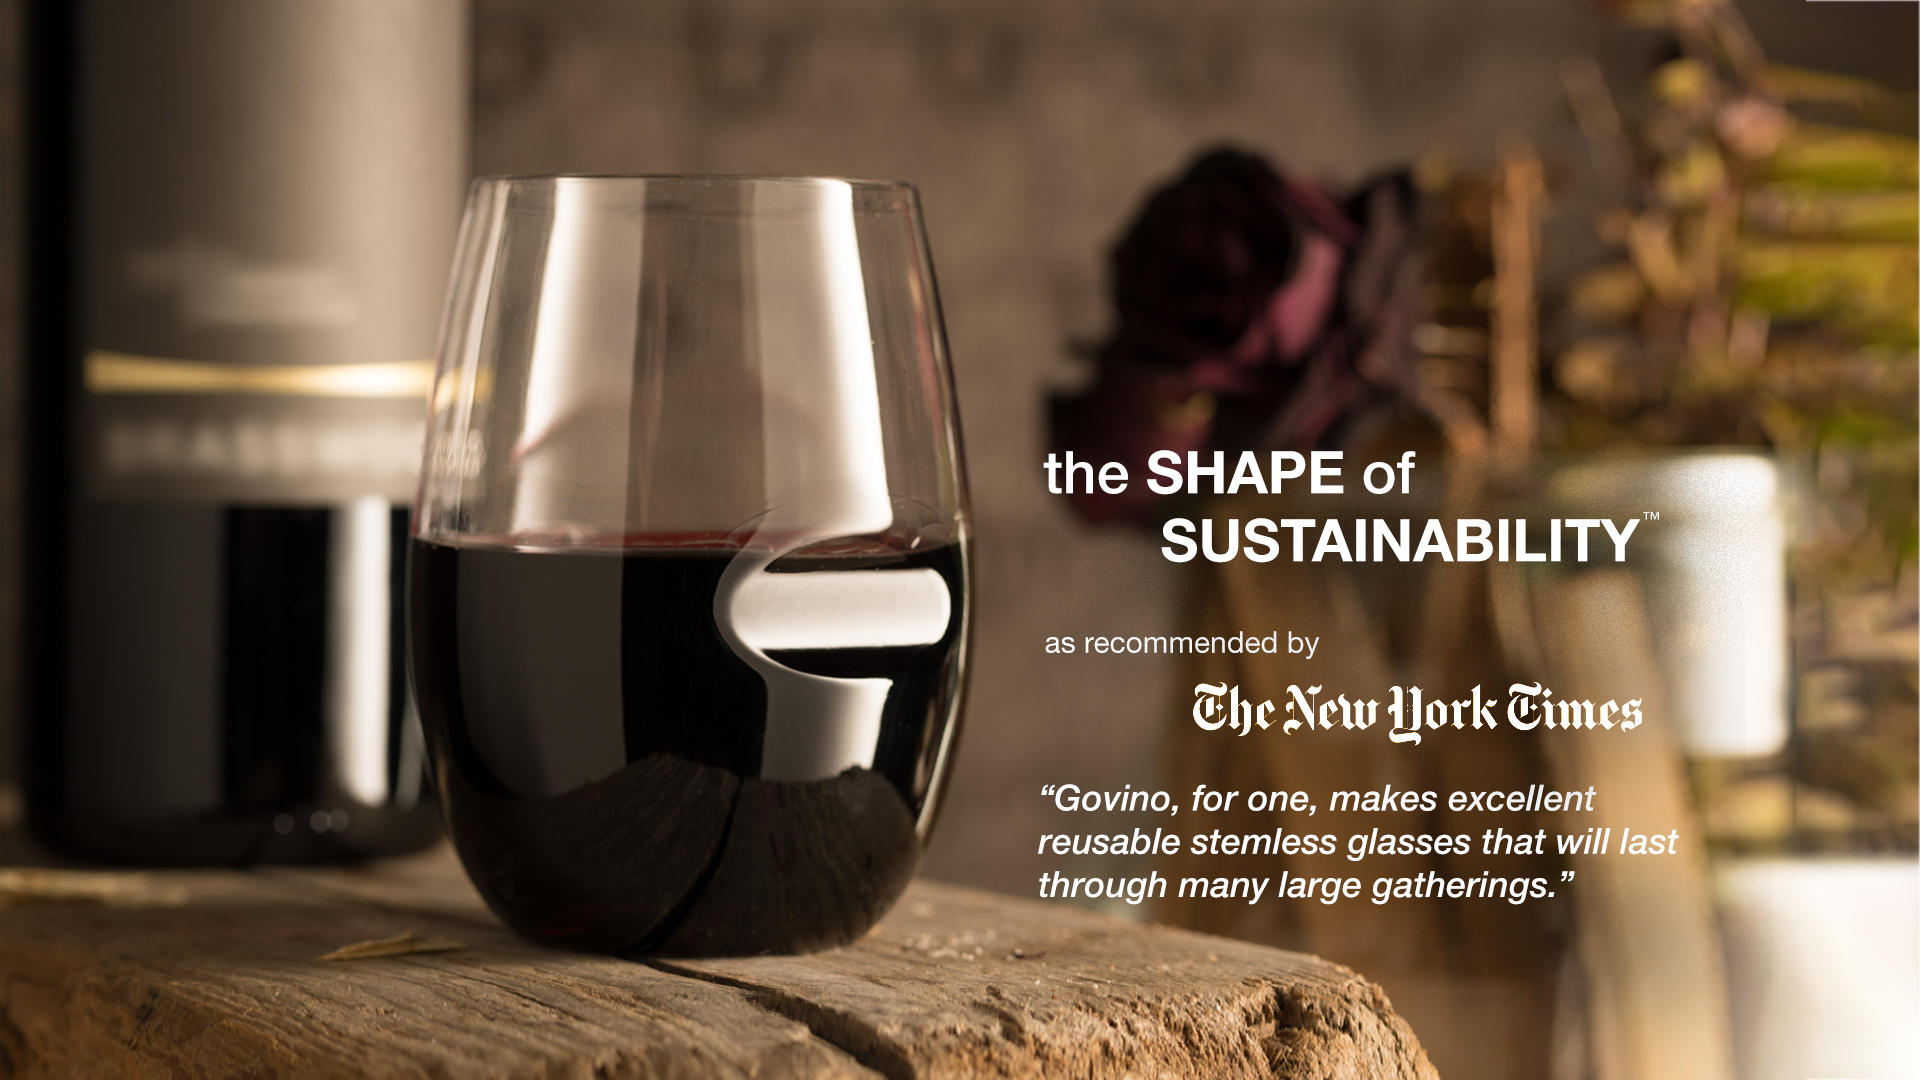 Stylish reusable plastic wine glasses (set of 4 or single) in 2023   Plastic wine glasses, Unbreakable wine glasses, Plastic wine glass